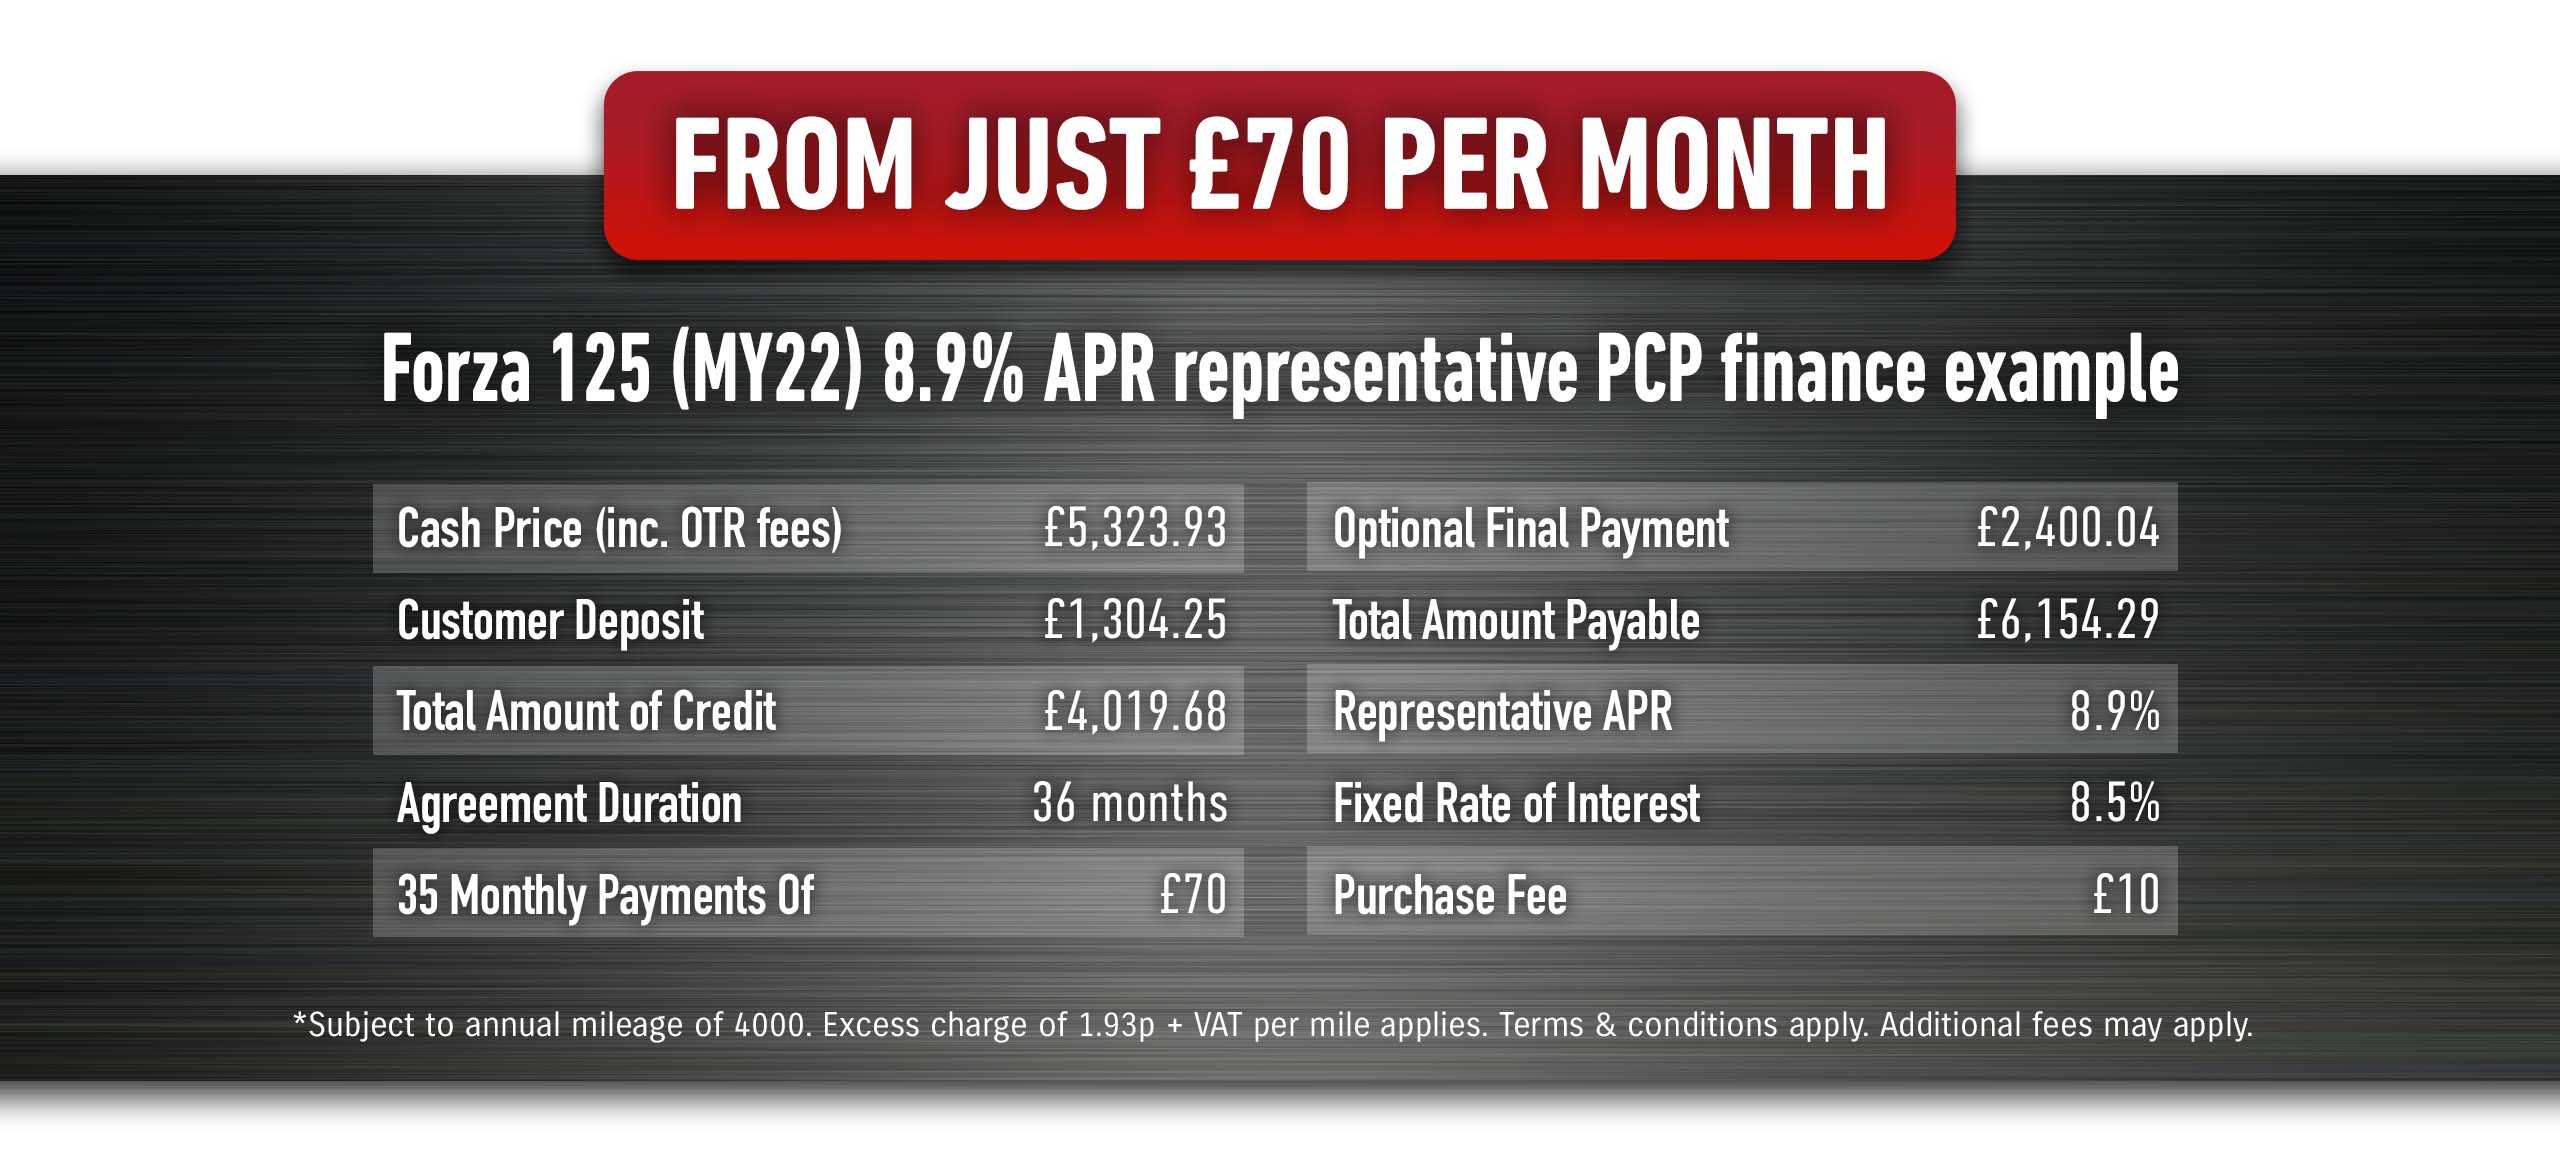 Forza 125 PCP finance example